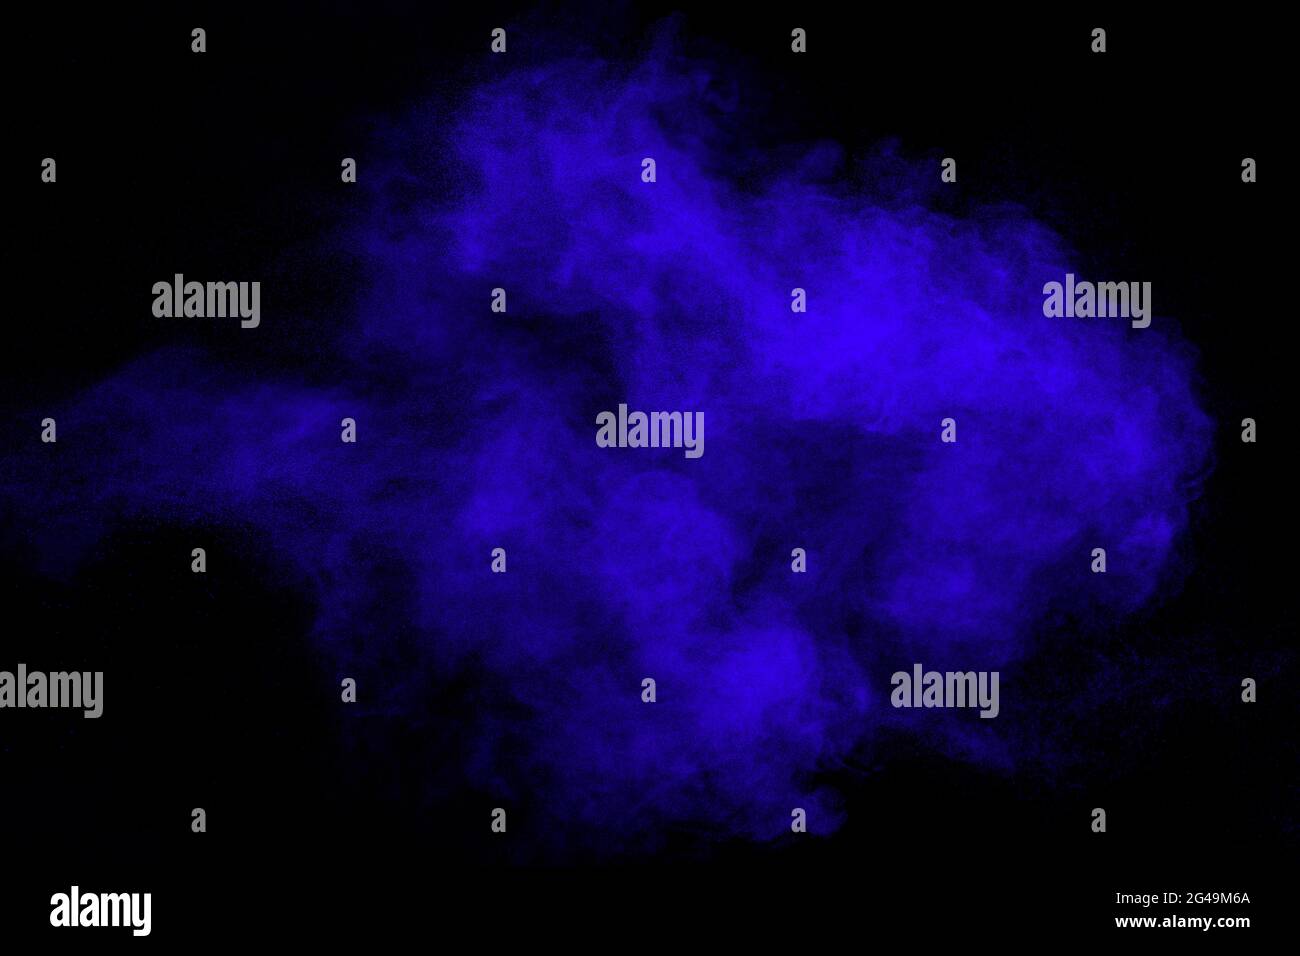 Blue color dust particles splash on black background. Stock Photo